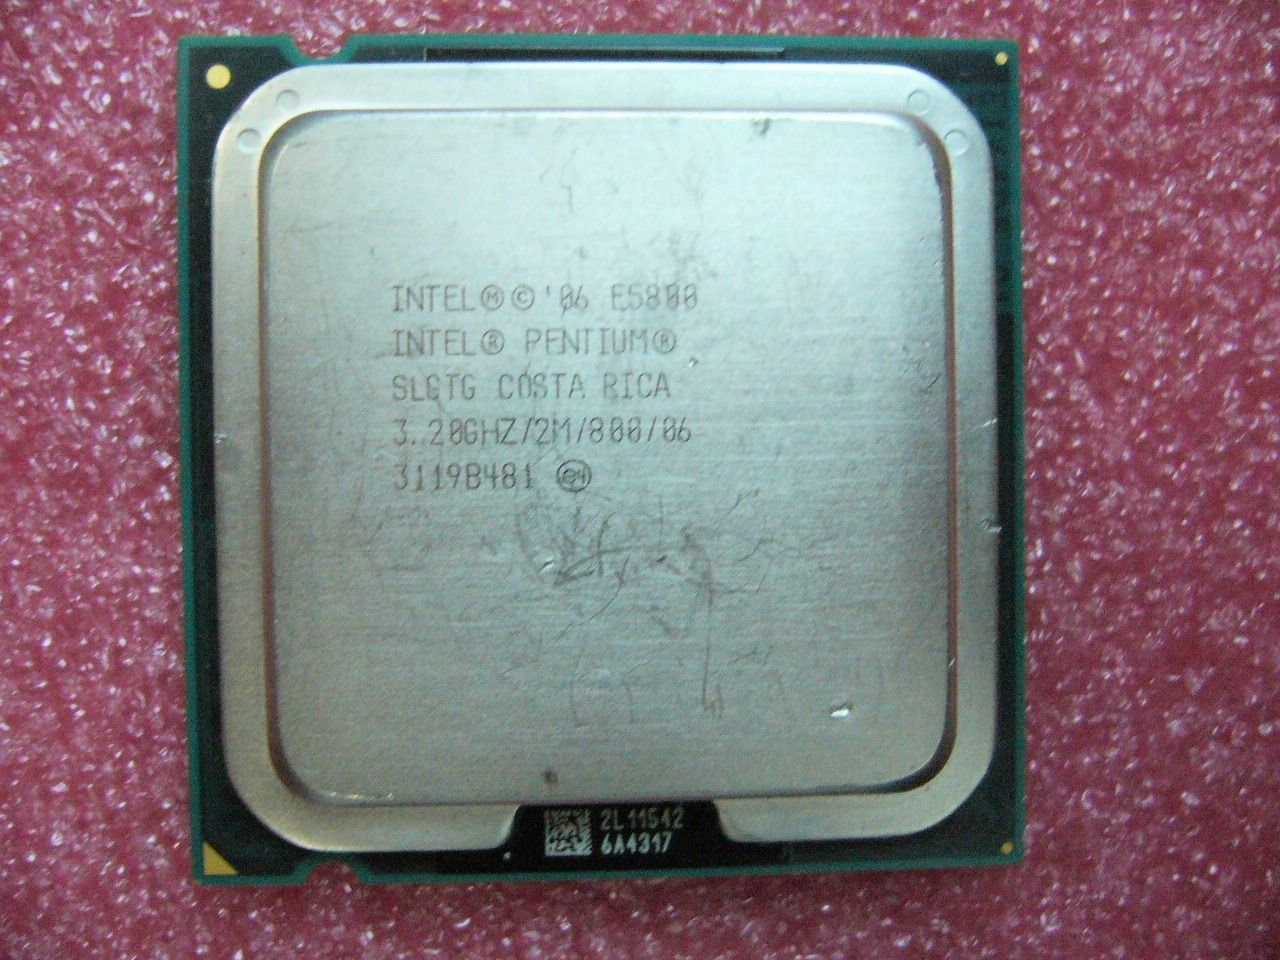 QTY 1x INTEL Pentium Dual Core E5800 CPU 3.2GHz 2MB/800Mhz LGA775 SLGTG - Click Image to Close